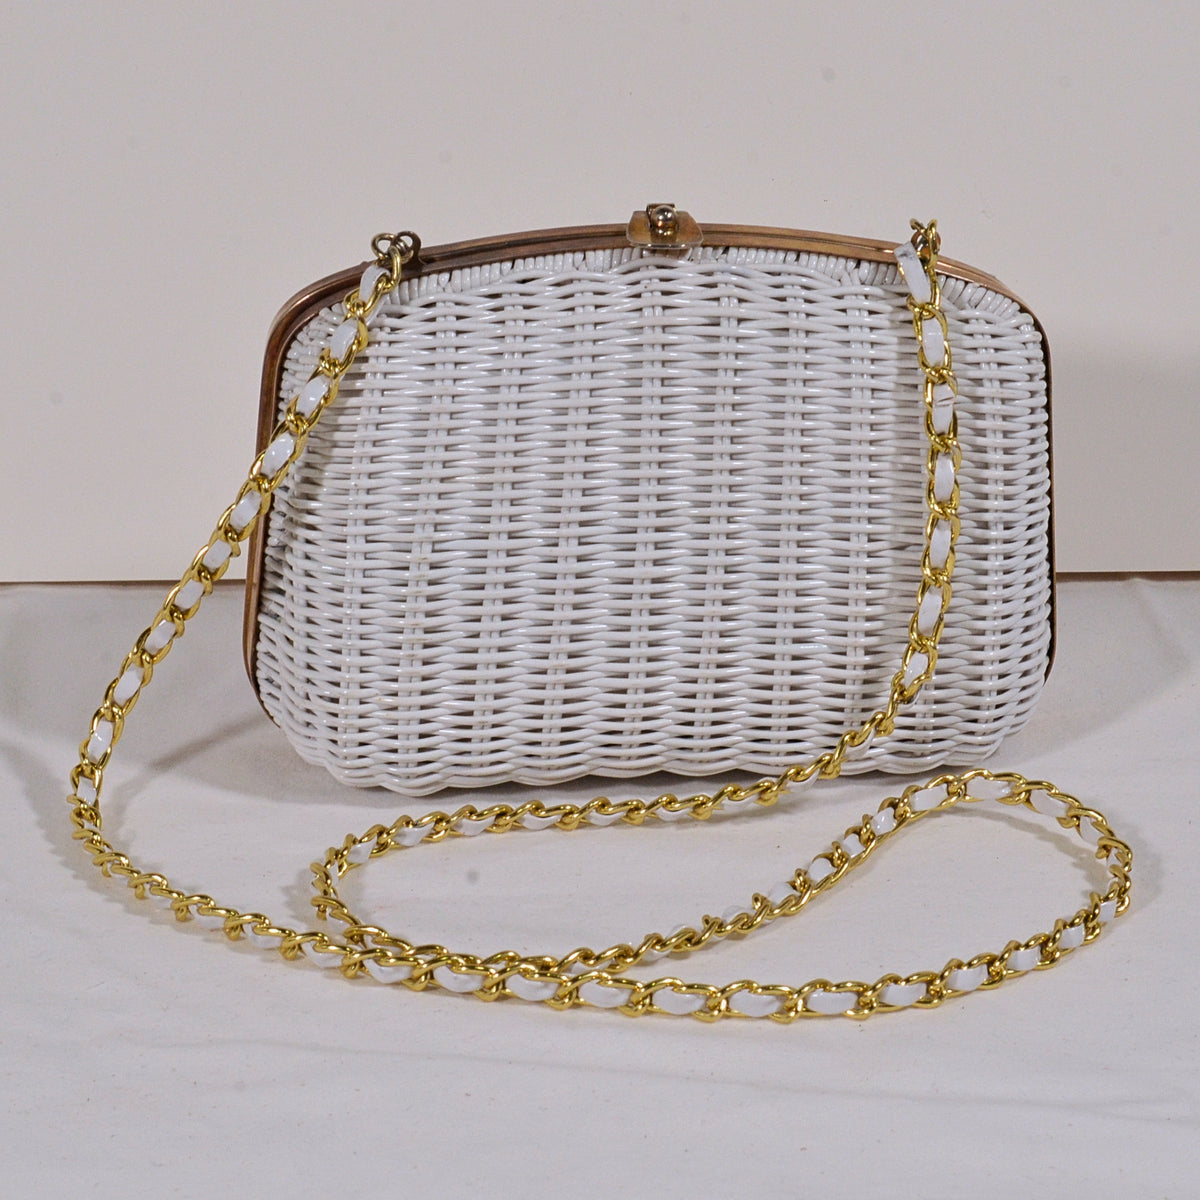 Vintage 50s White Wicker Beaded Handbag, Lucite Top Handles by